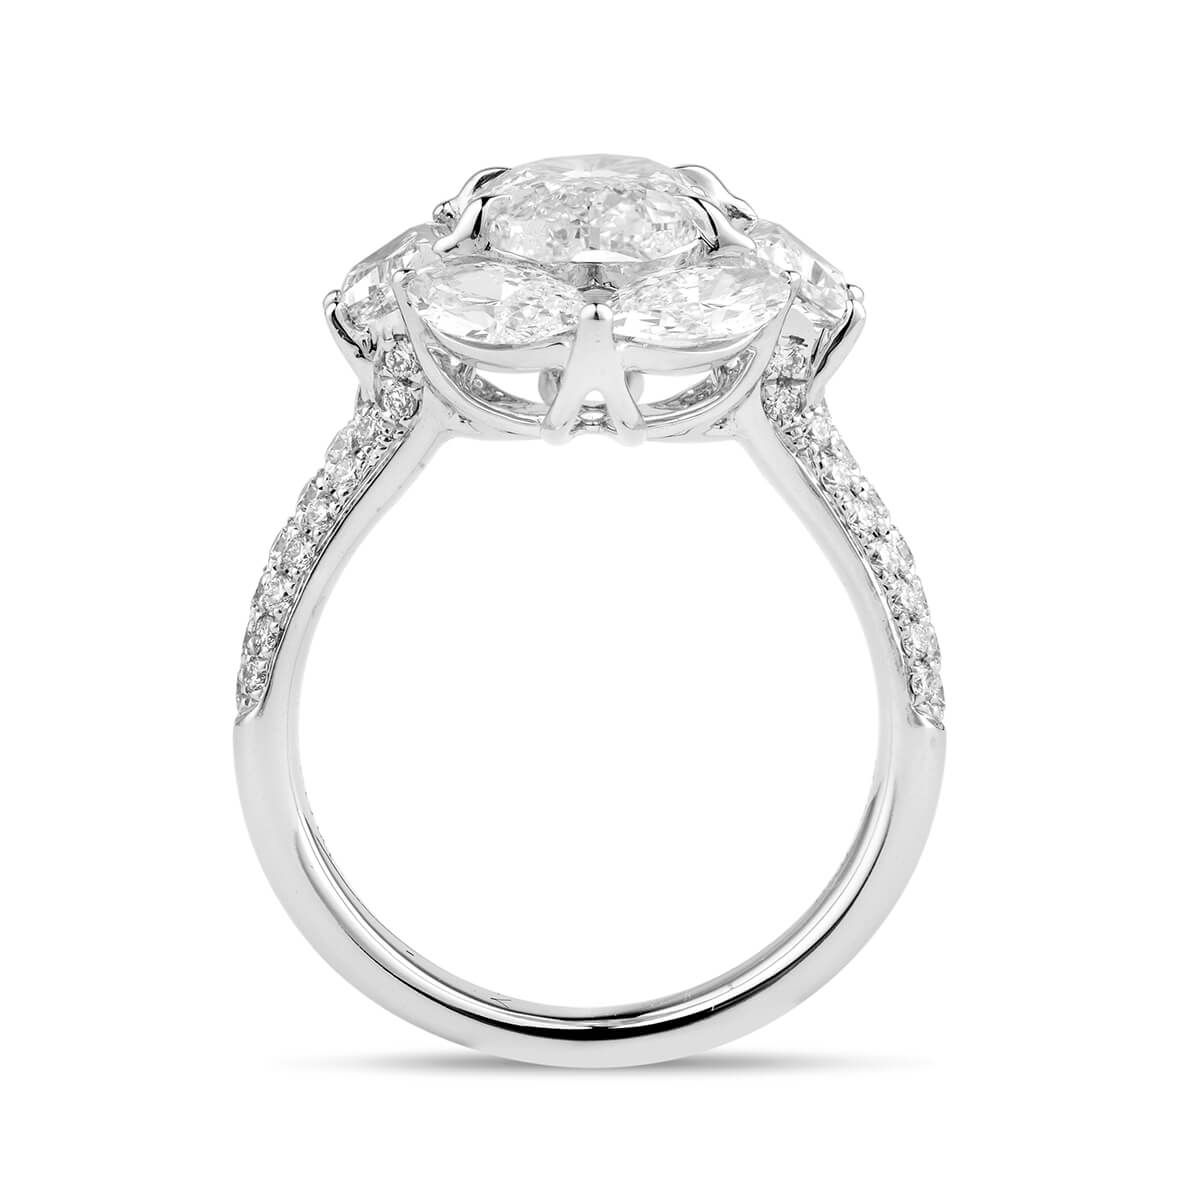  White Diamond Ring, 4.15 Ct. TW, Oval shape, GIA Certified, 2287856975